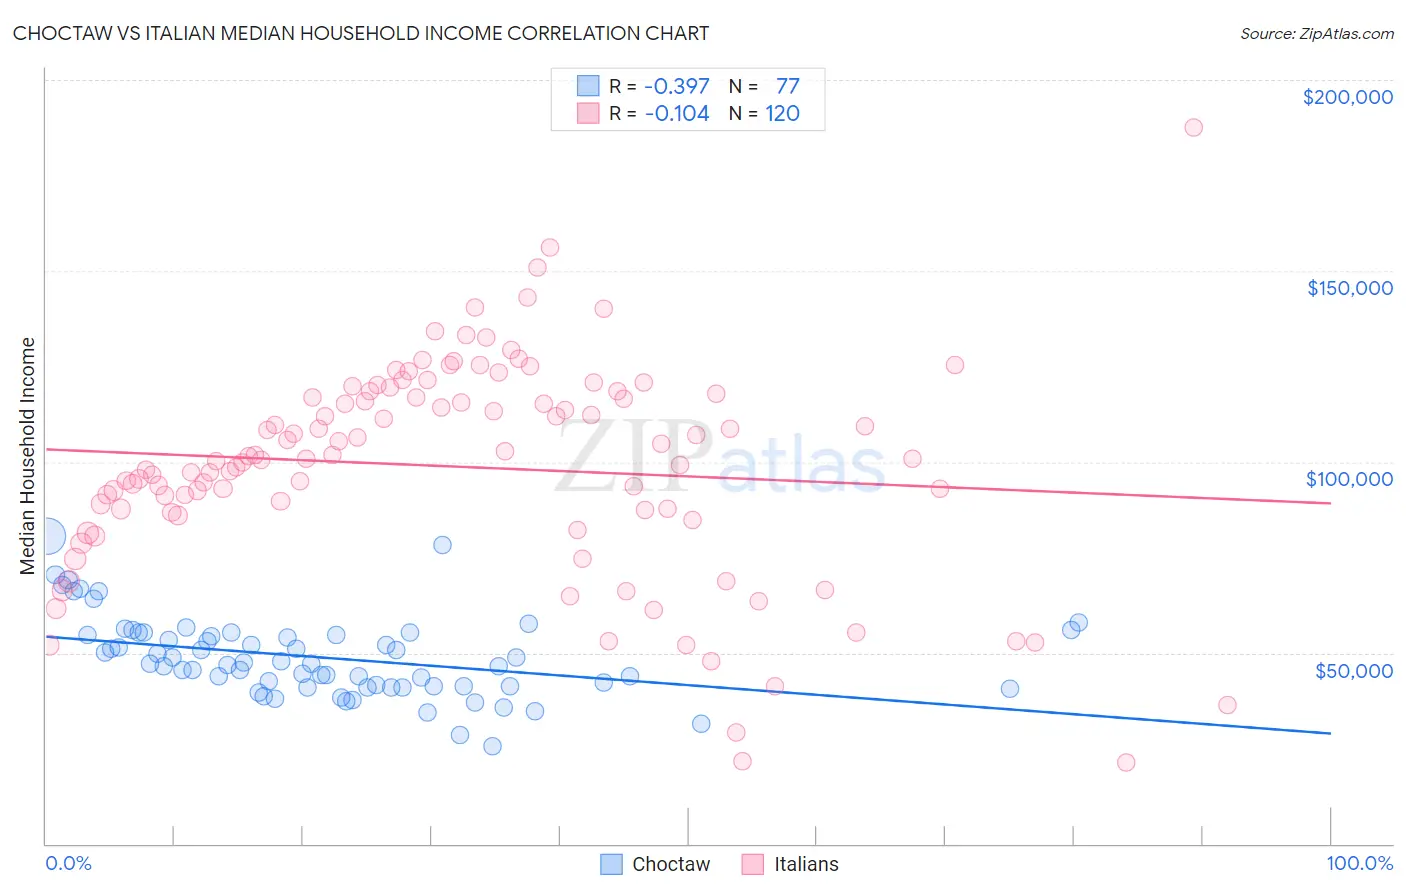 Choctaw vs Italian Median Household Income